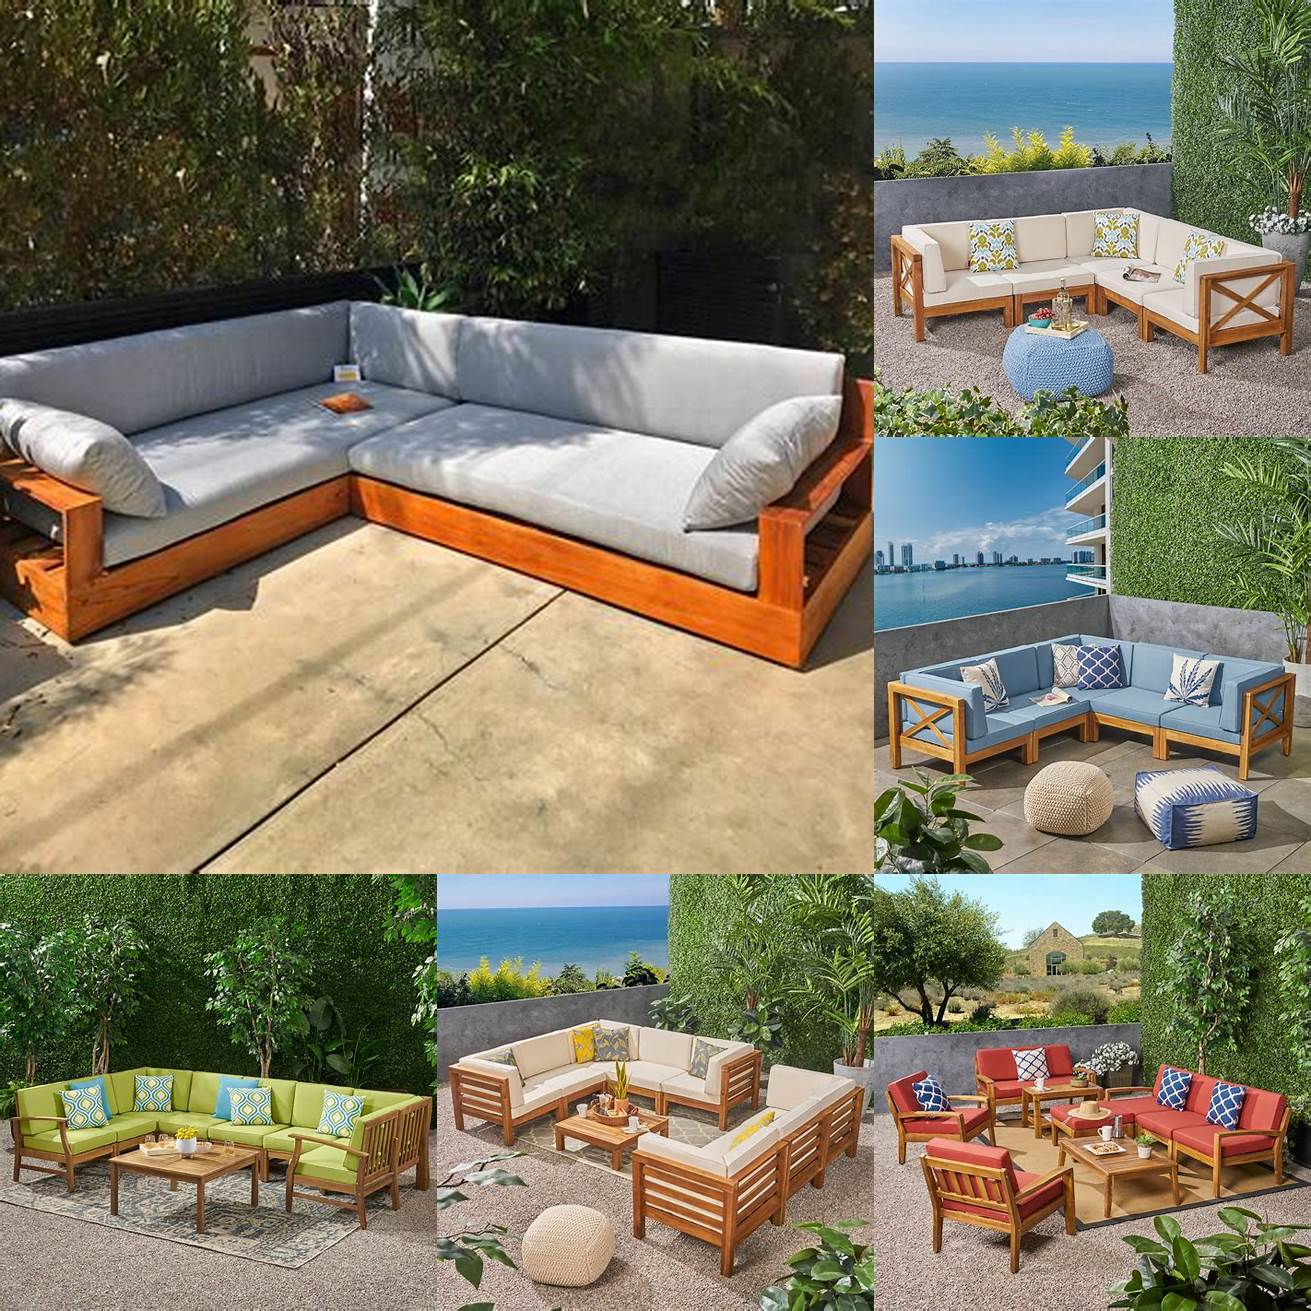 2 Teak outdoor furniture sectional deep cushions in a garden